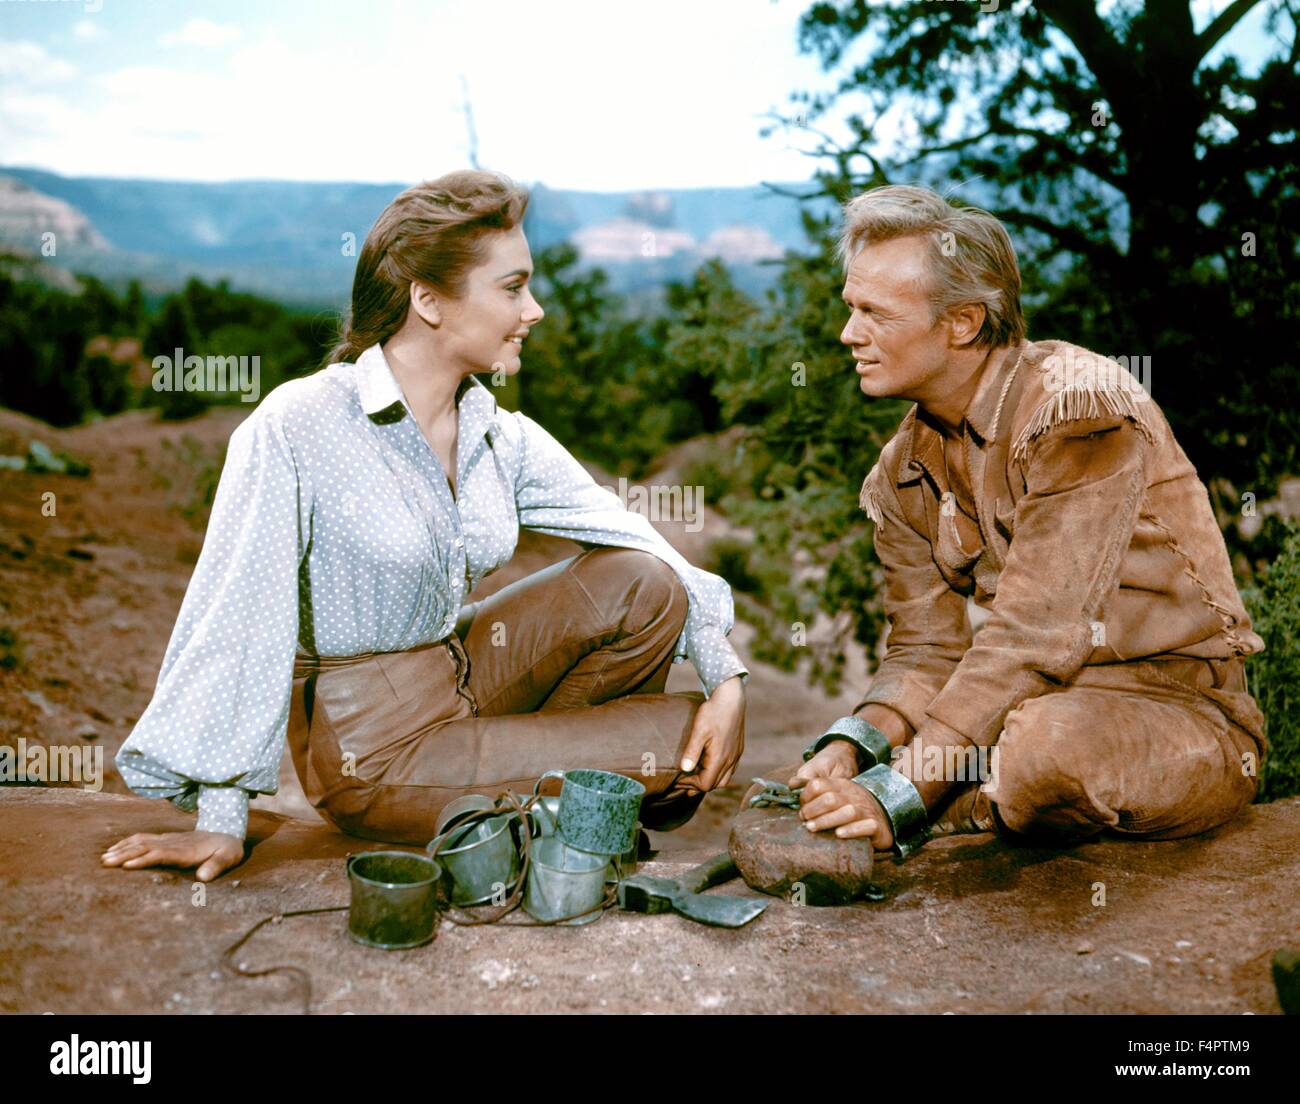 Felicia Farr and Richard Widmark / The Last Wagon / 1956 directed by Delmer Daves [Twentieth Century Fox Film Corpo] Stock Photo